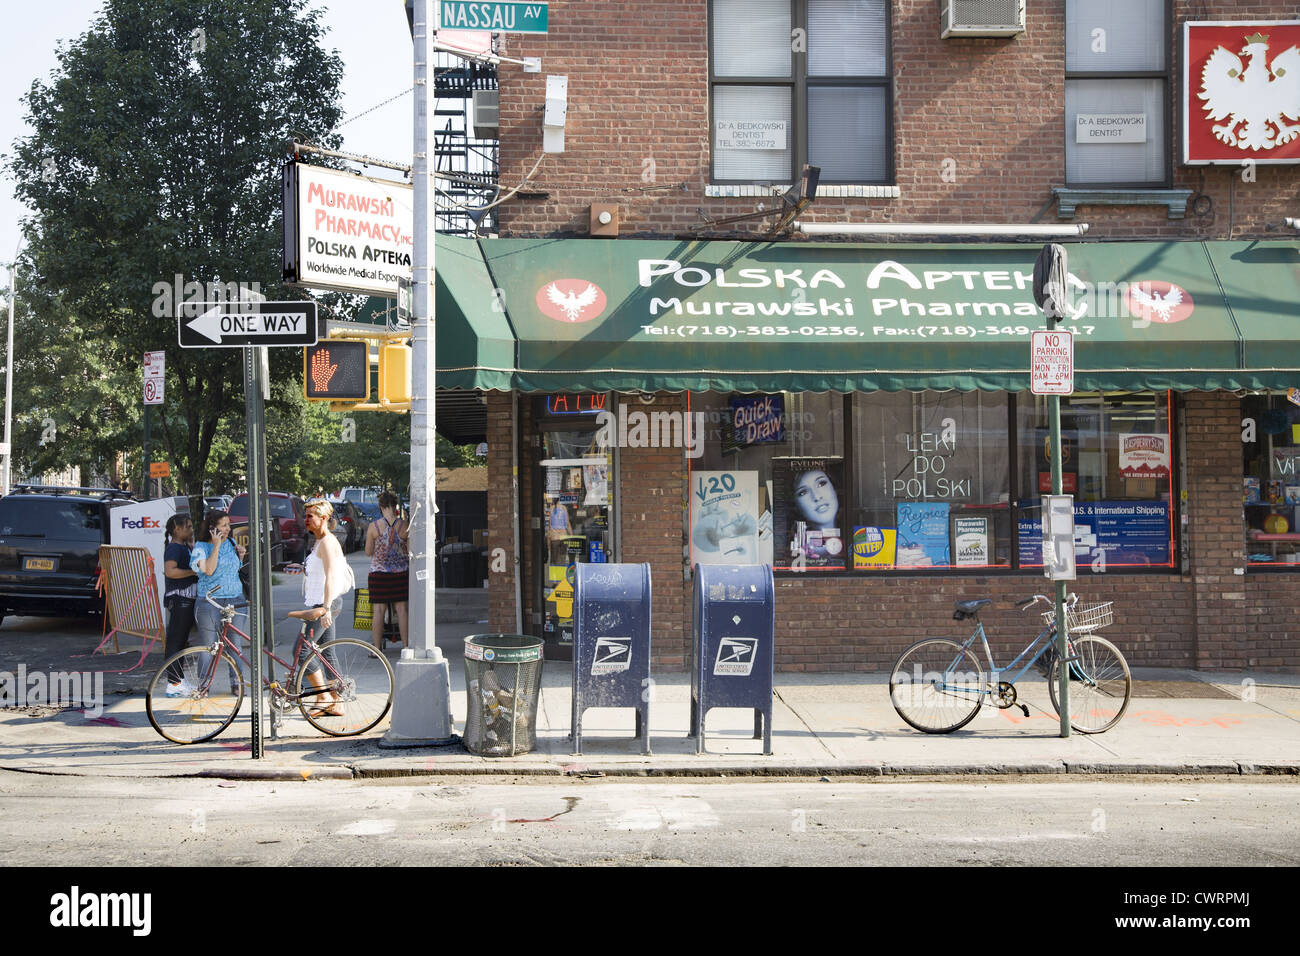 Nassau Avenue in Greenpoint Brooklyn, an old well established Polish neighborhood. Stock Photo